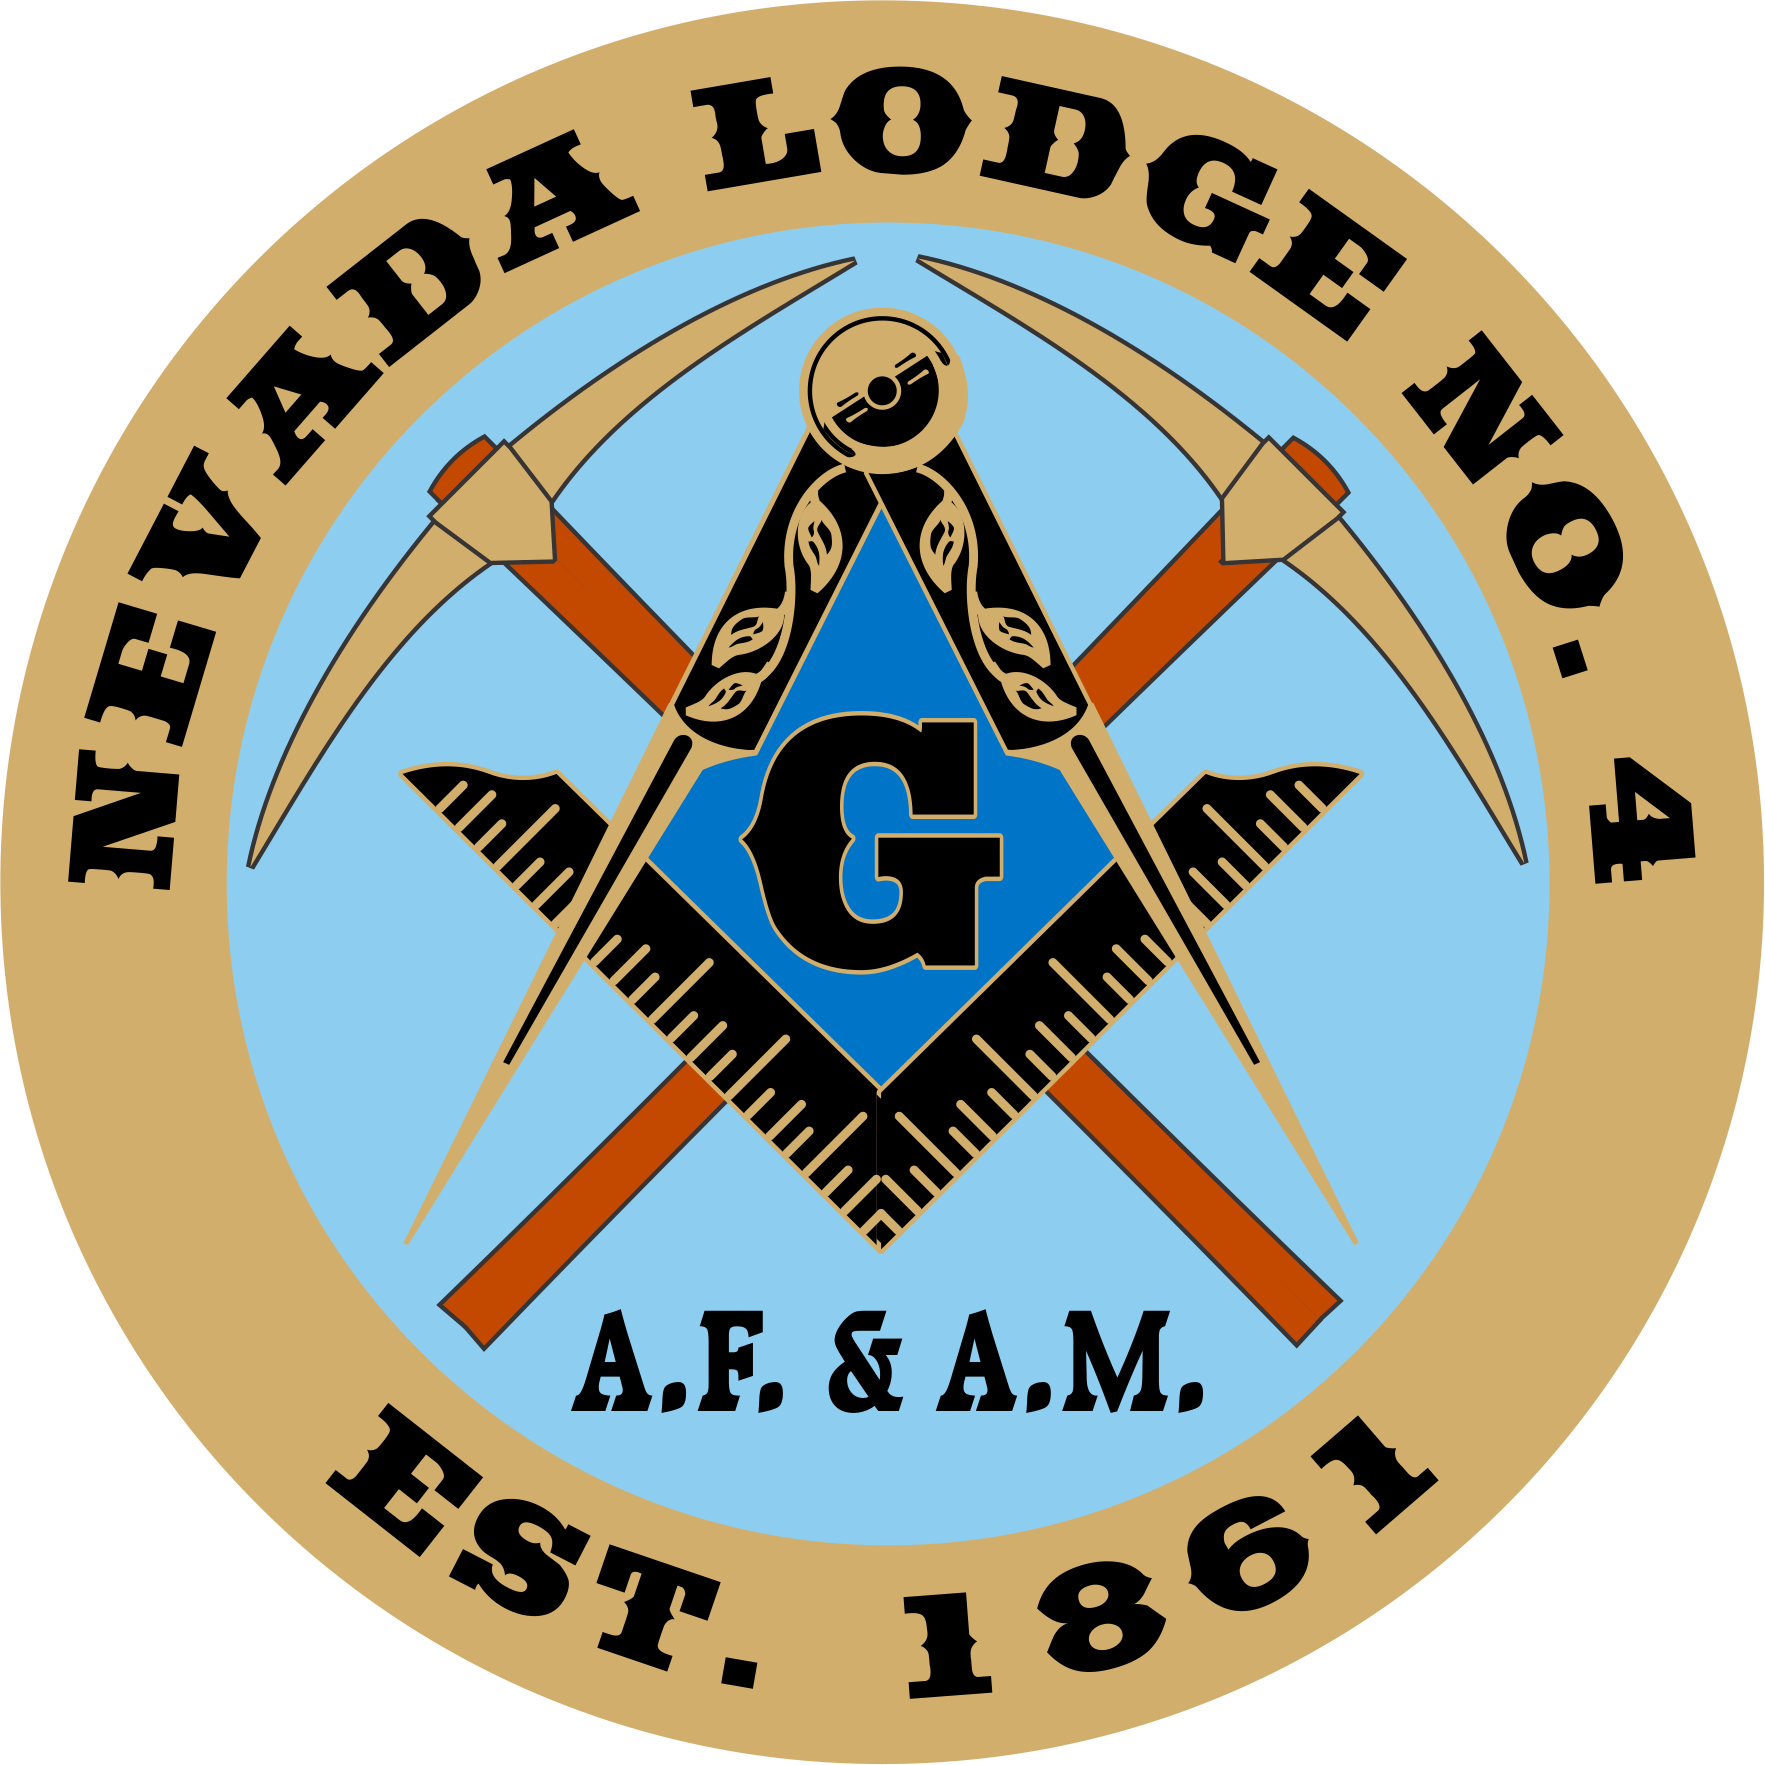 Nevada Lodge #4 A.F.&A.M.